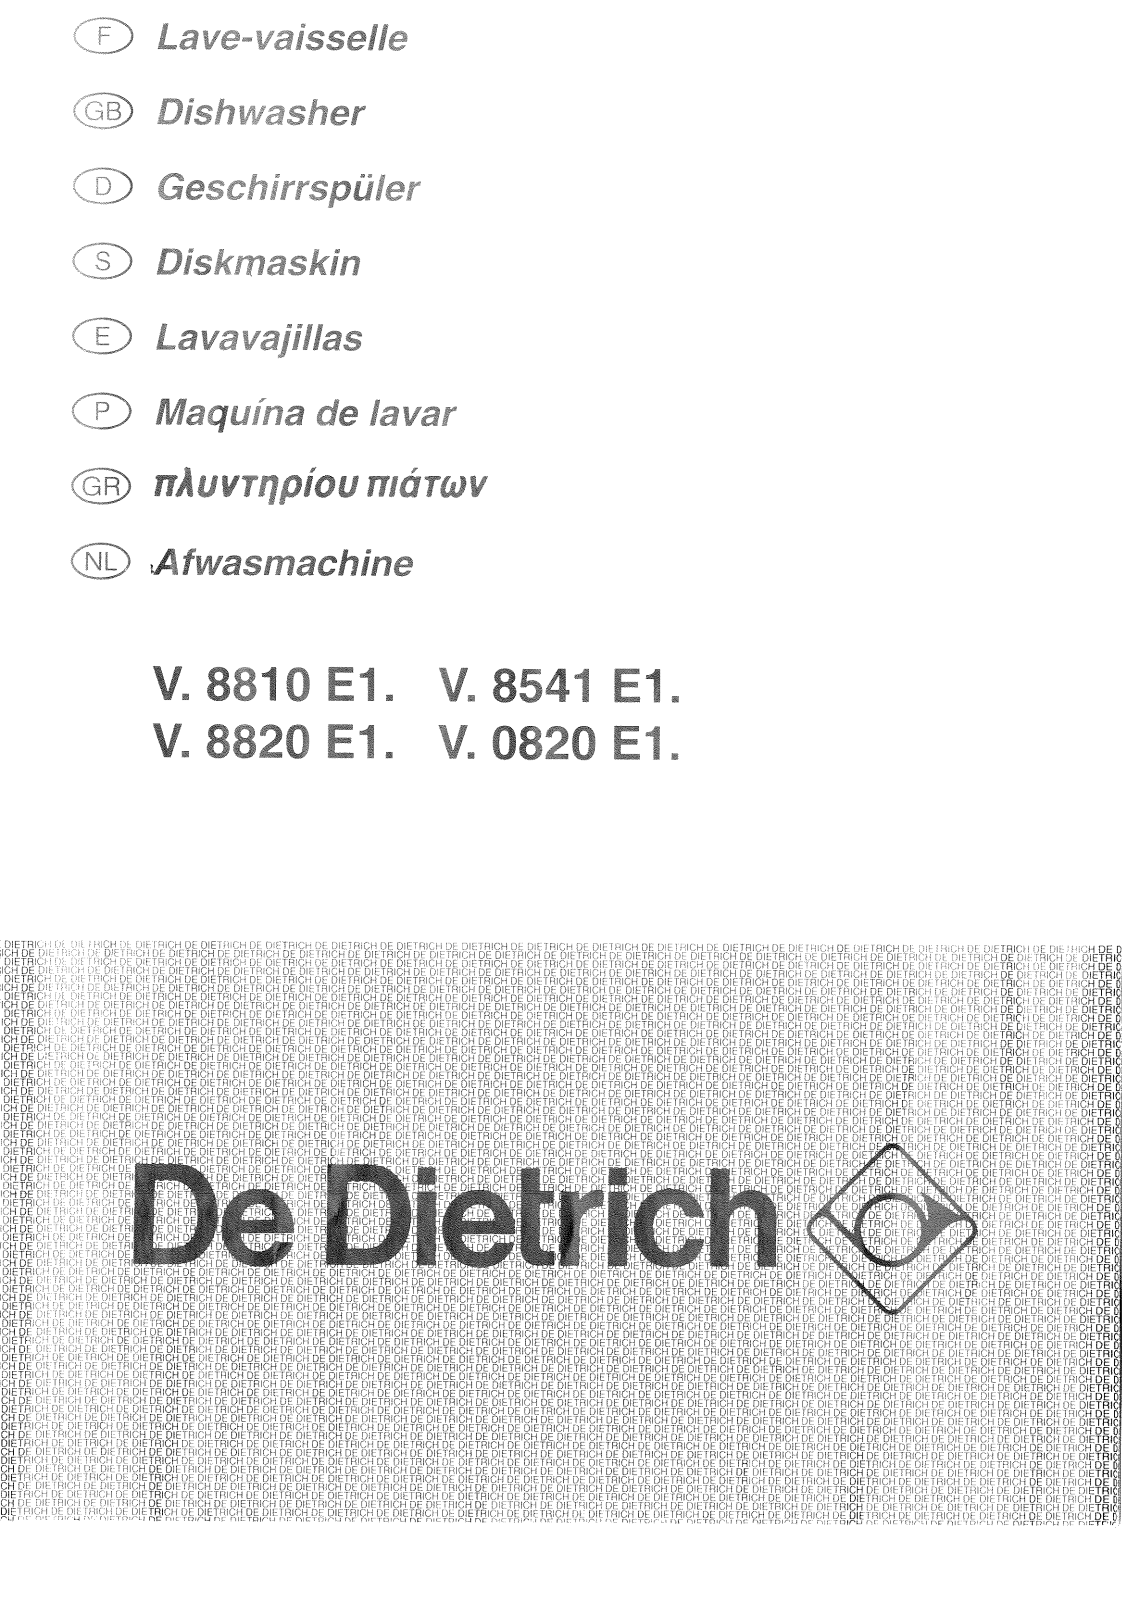 De dietrich VN8810E1, VW8820E1, VD0820E1, VN8820E1 User Manual